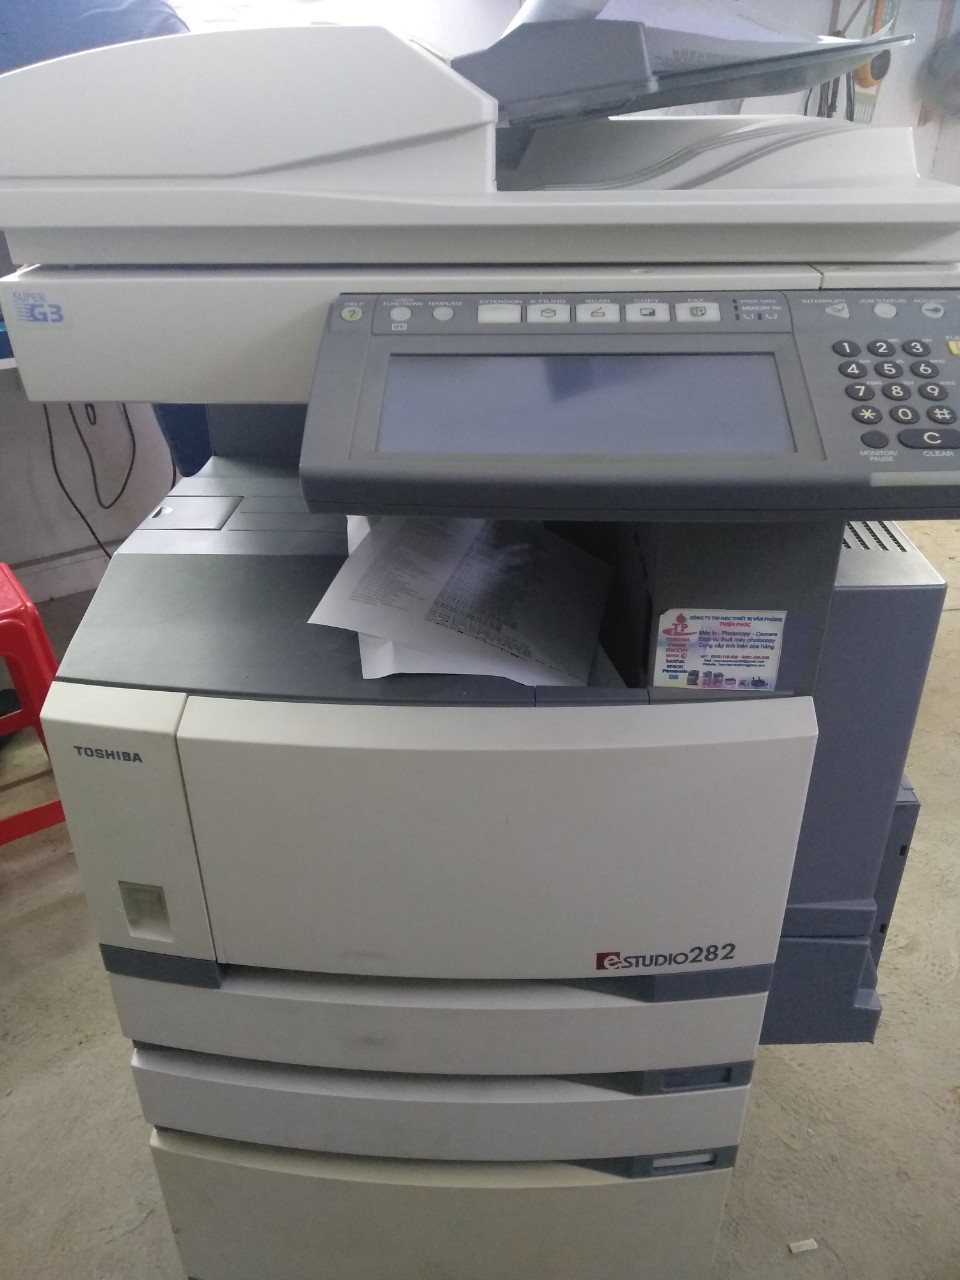 Thanh lý máy photocopy còn mới TPHCM